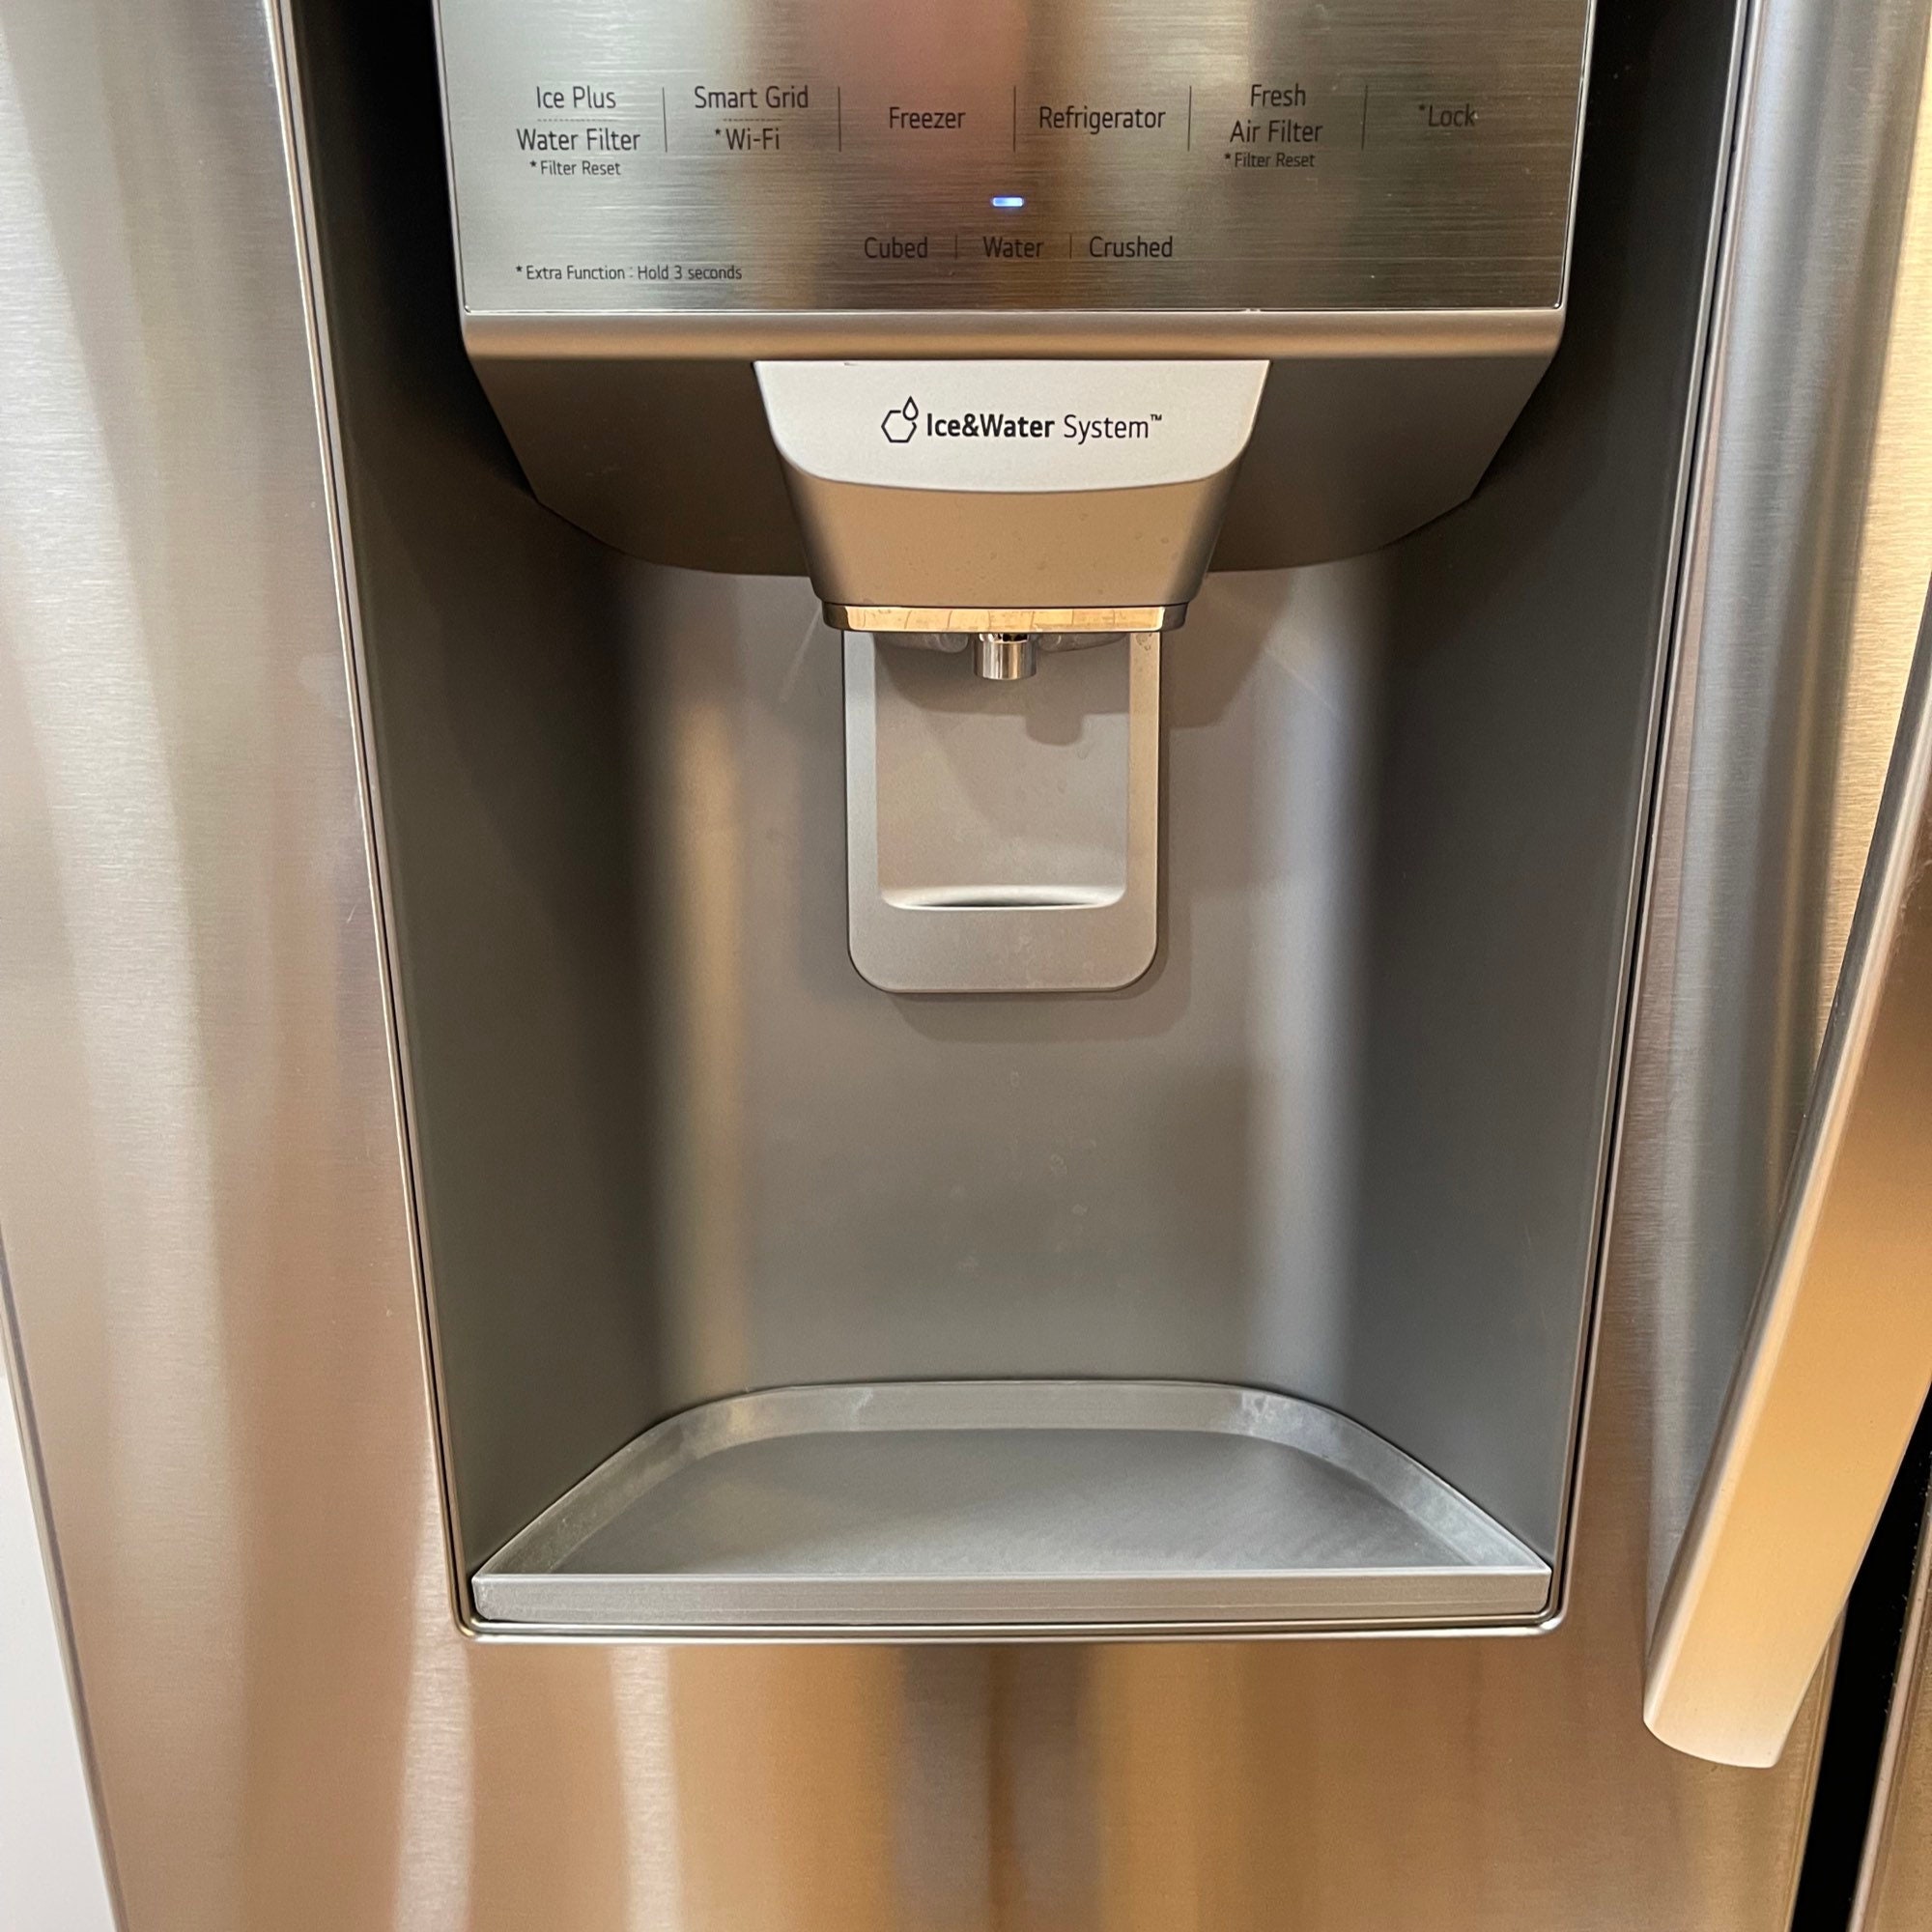 Silicone Refrigerator Drip Tray Freezer Water Dispenser Drip